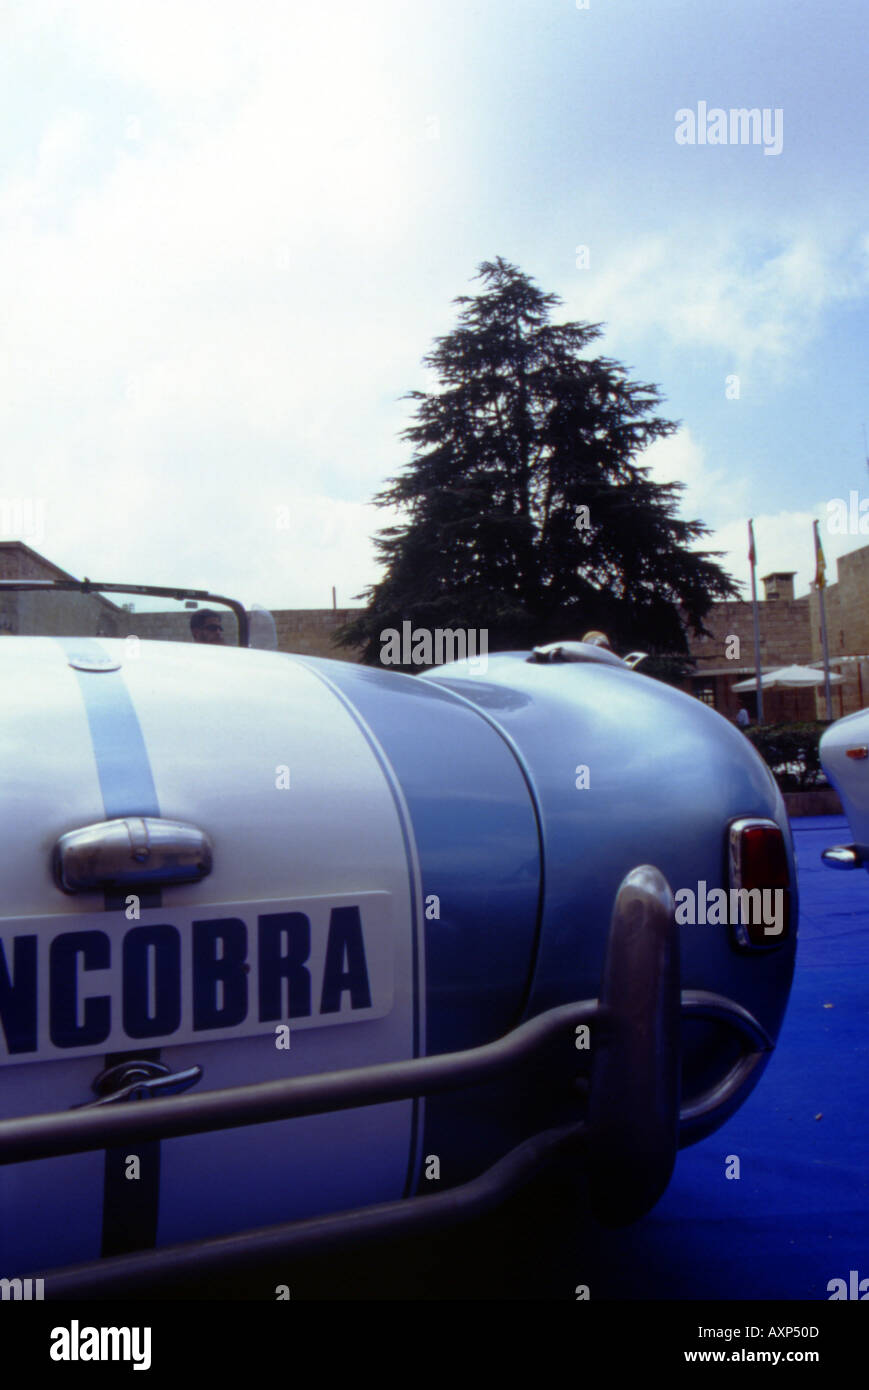 american classic car ford cobra serie 427 blue white backside lebanon Stock Photo